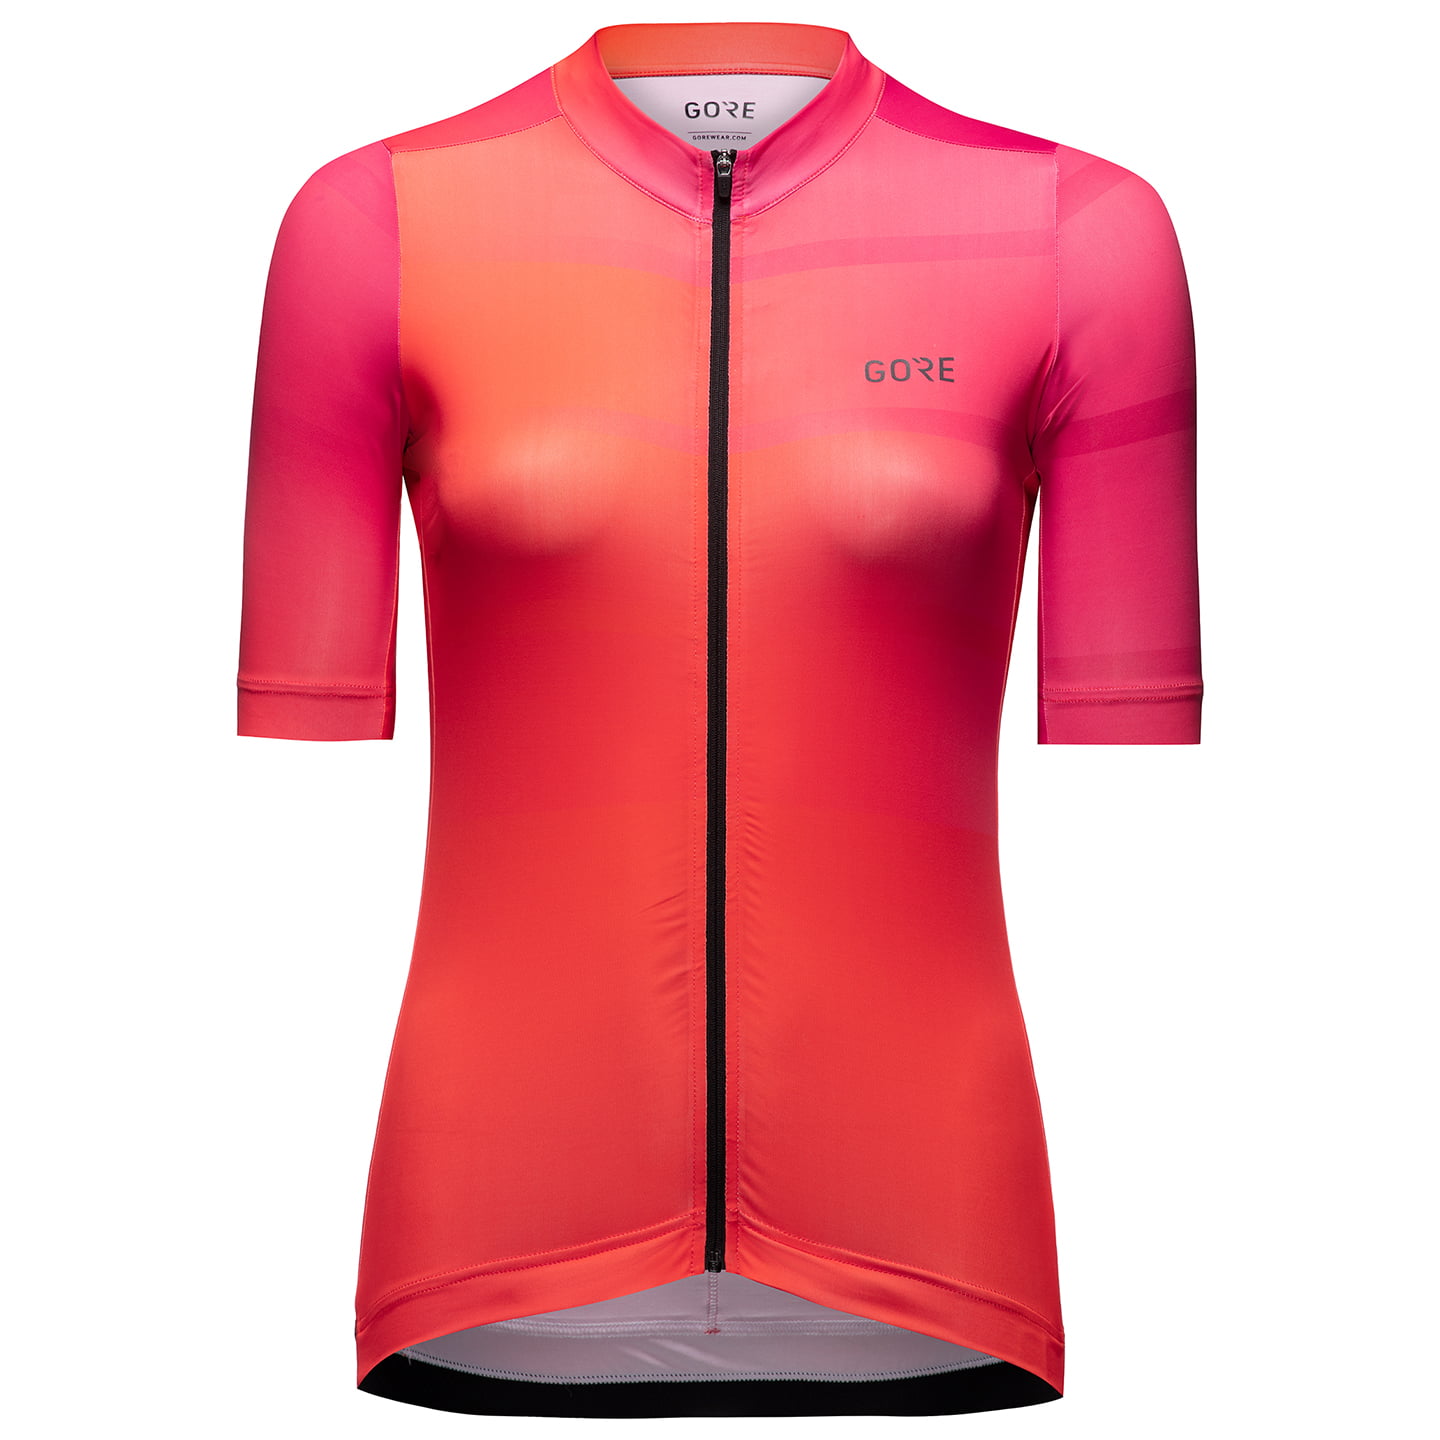 GORE WEAR Ardent Women’s Jersey Women’s Short Sleeve Jersey, size 36, Bike Jersey, Cycling clothes